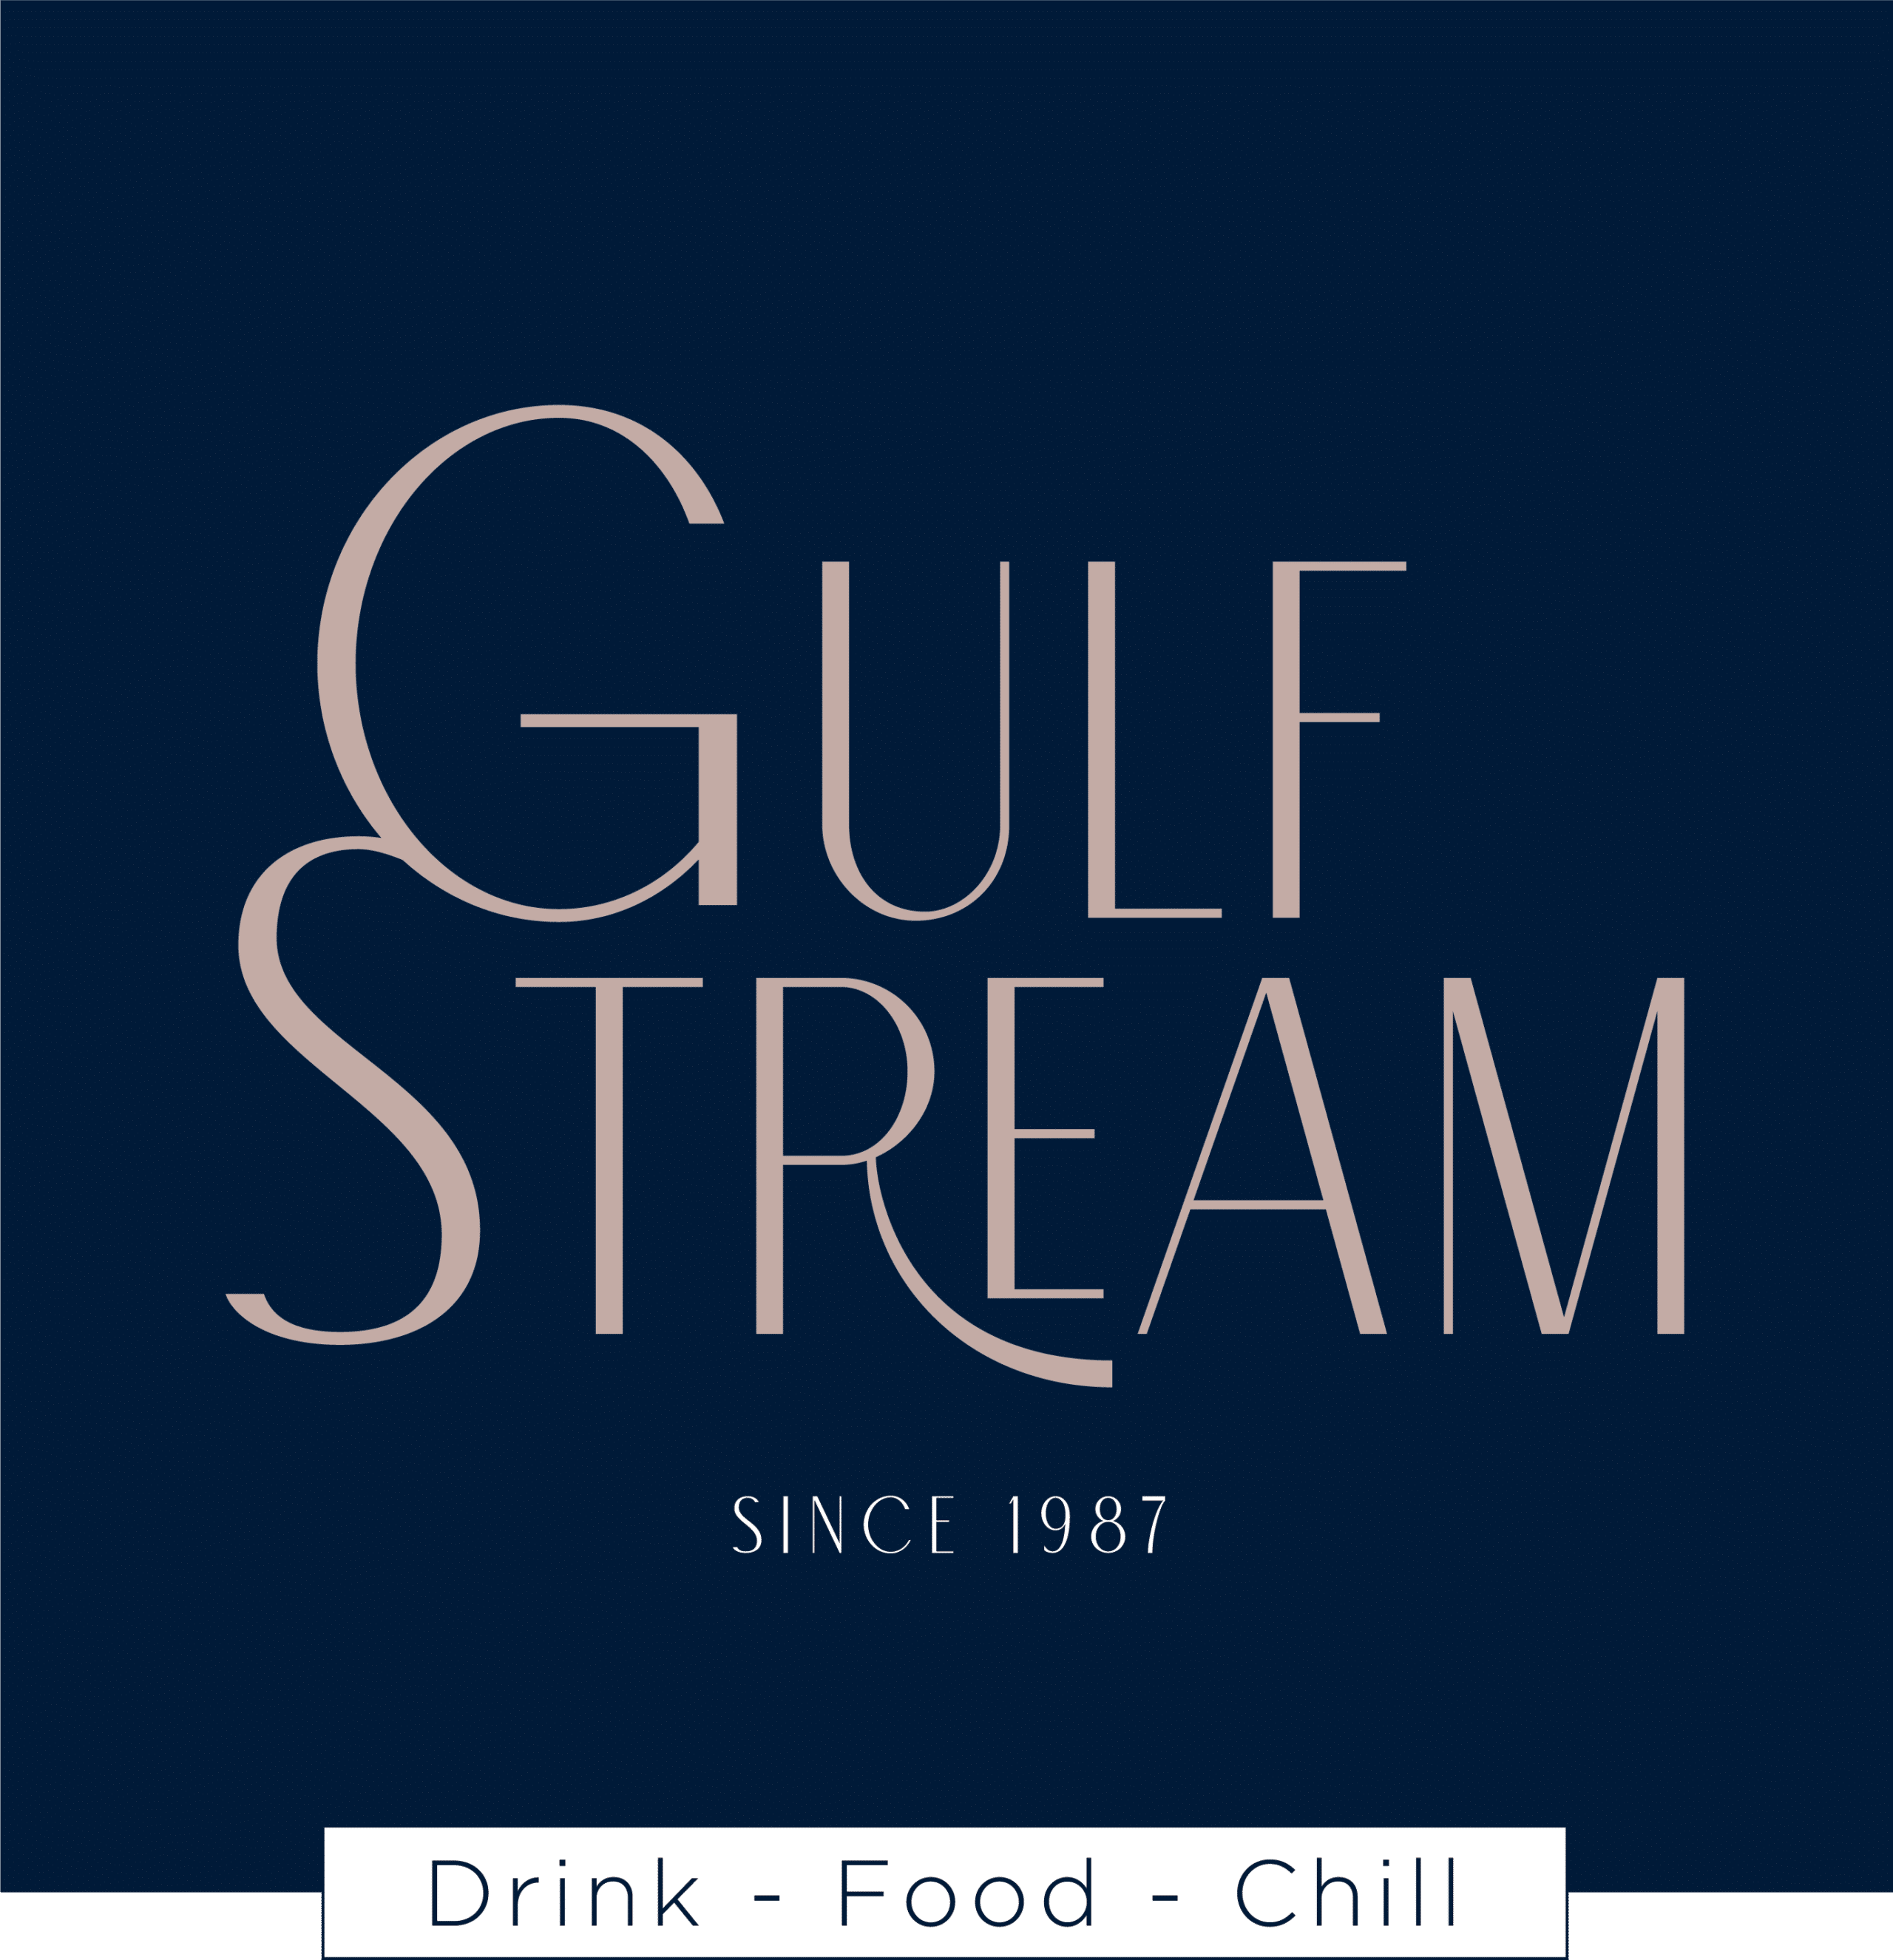 Le Gulf Stream Restaurant La Baule